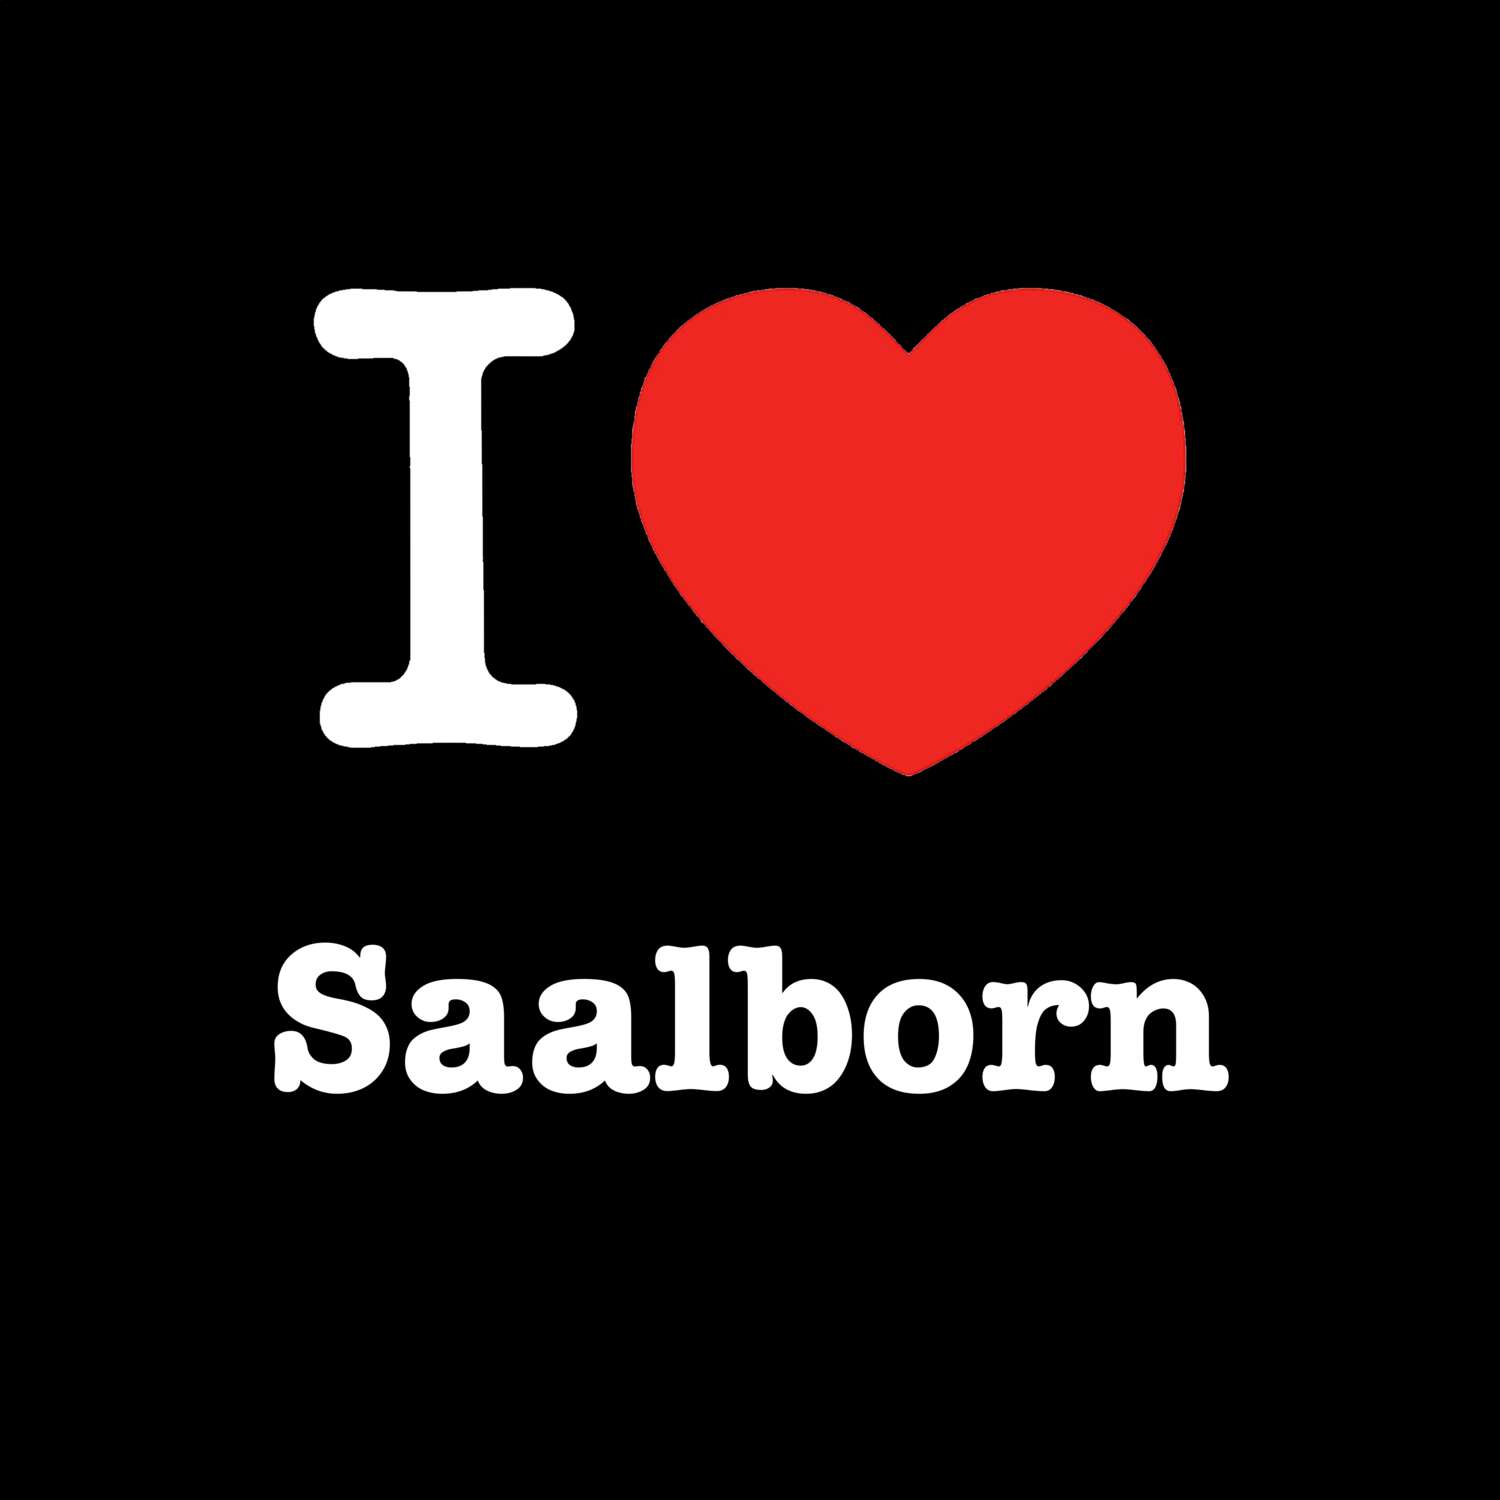 Saalborn T-Shirt »I love«